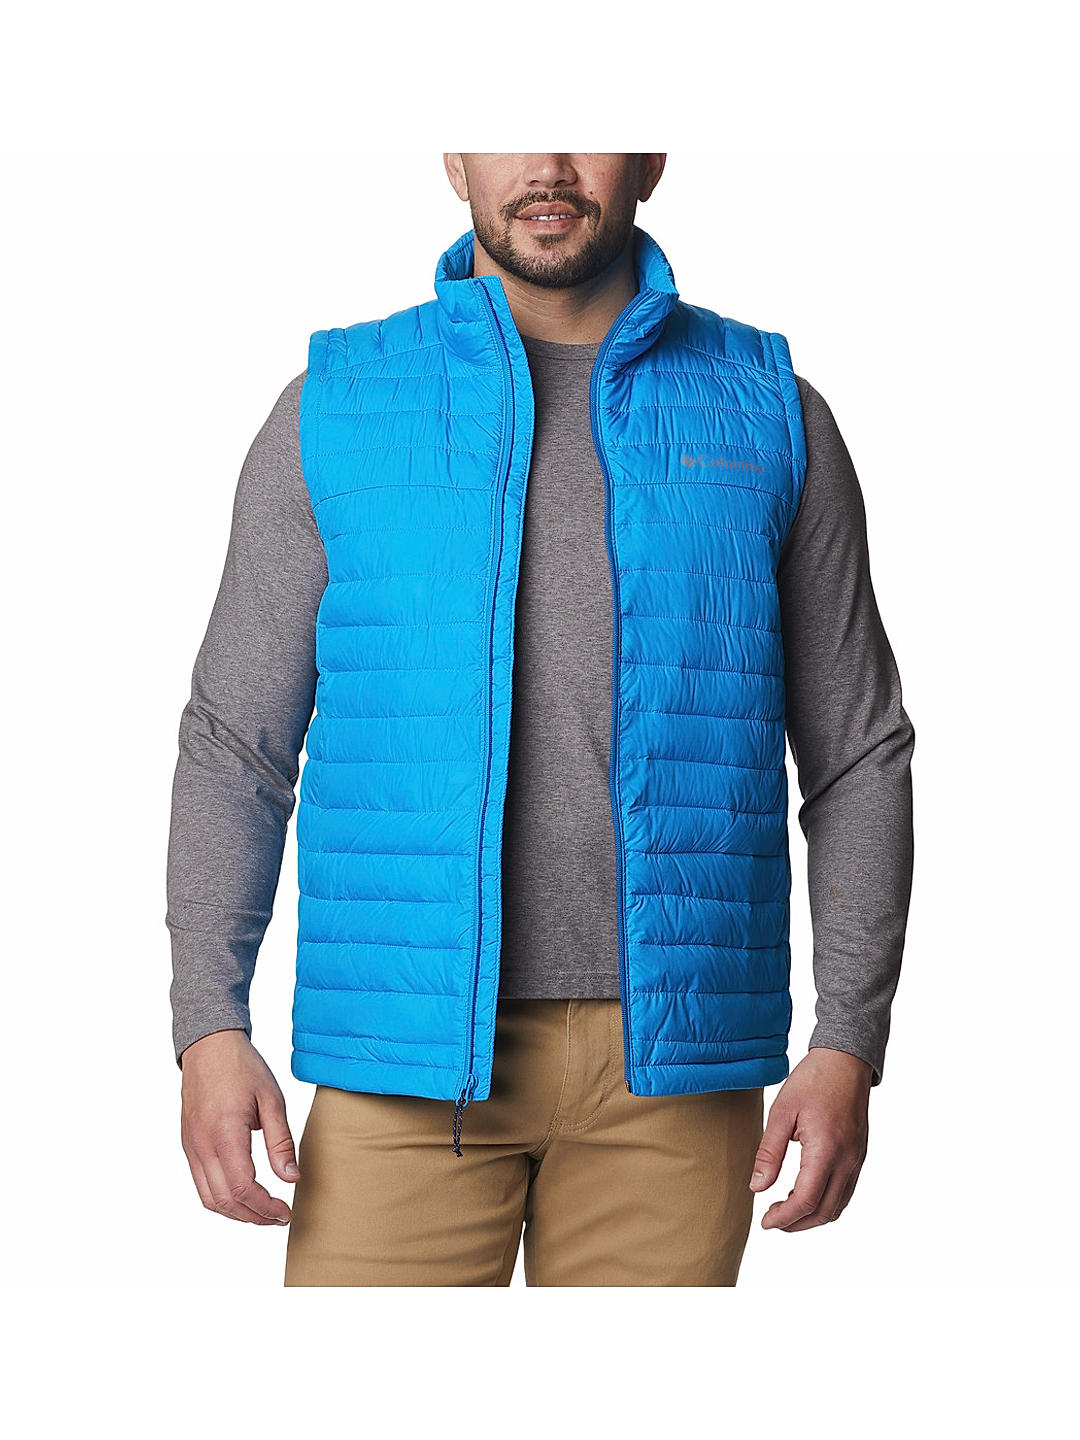 Buy Blue Silver Falls Vest for Men Online at Columbia Sportswear | 500811